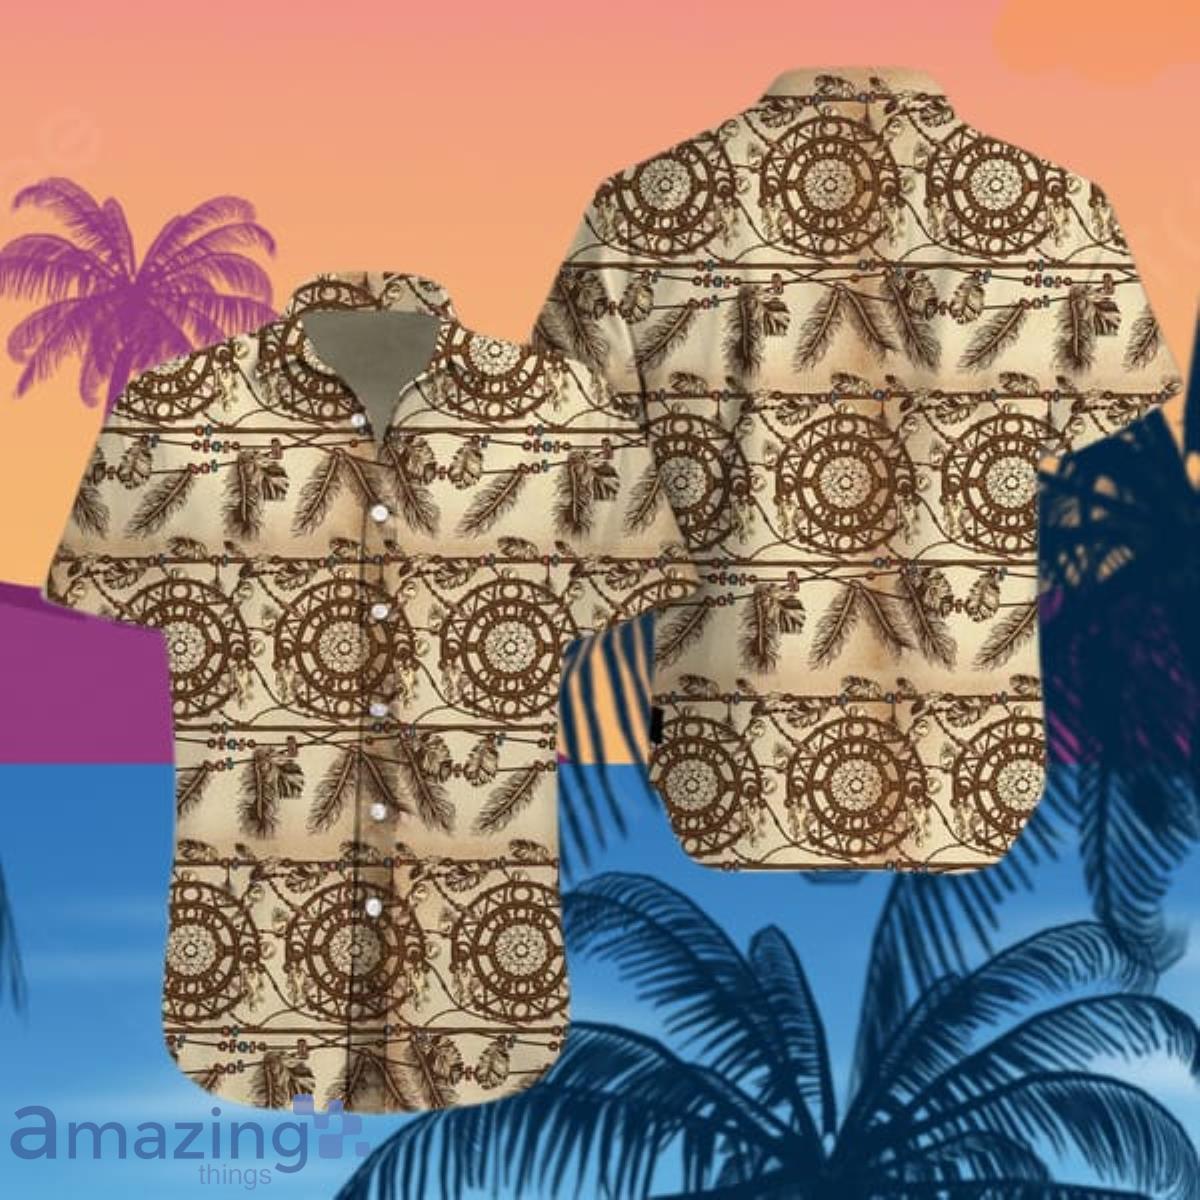 Native American Pattern Hawaiian Shirt Best Gift For Men Women